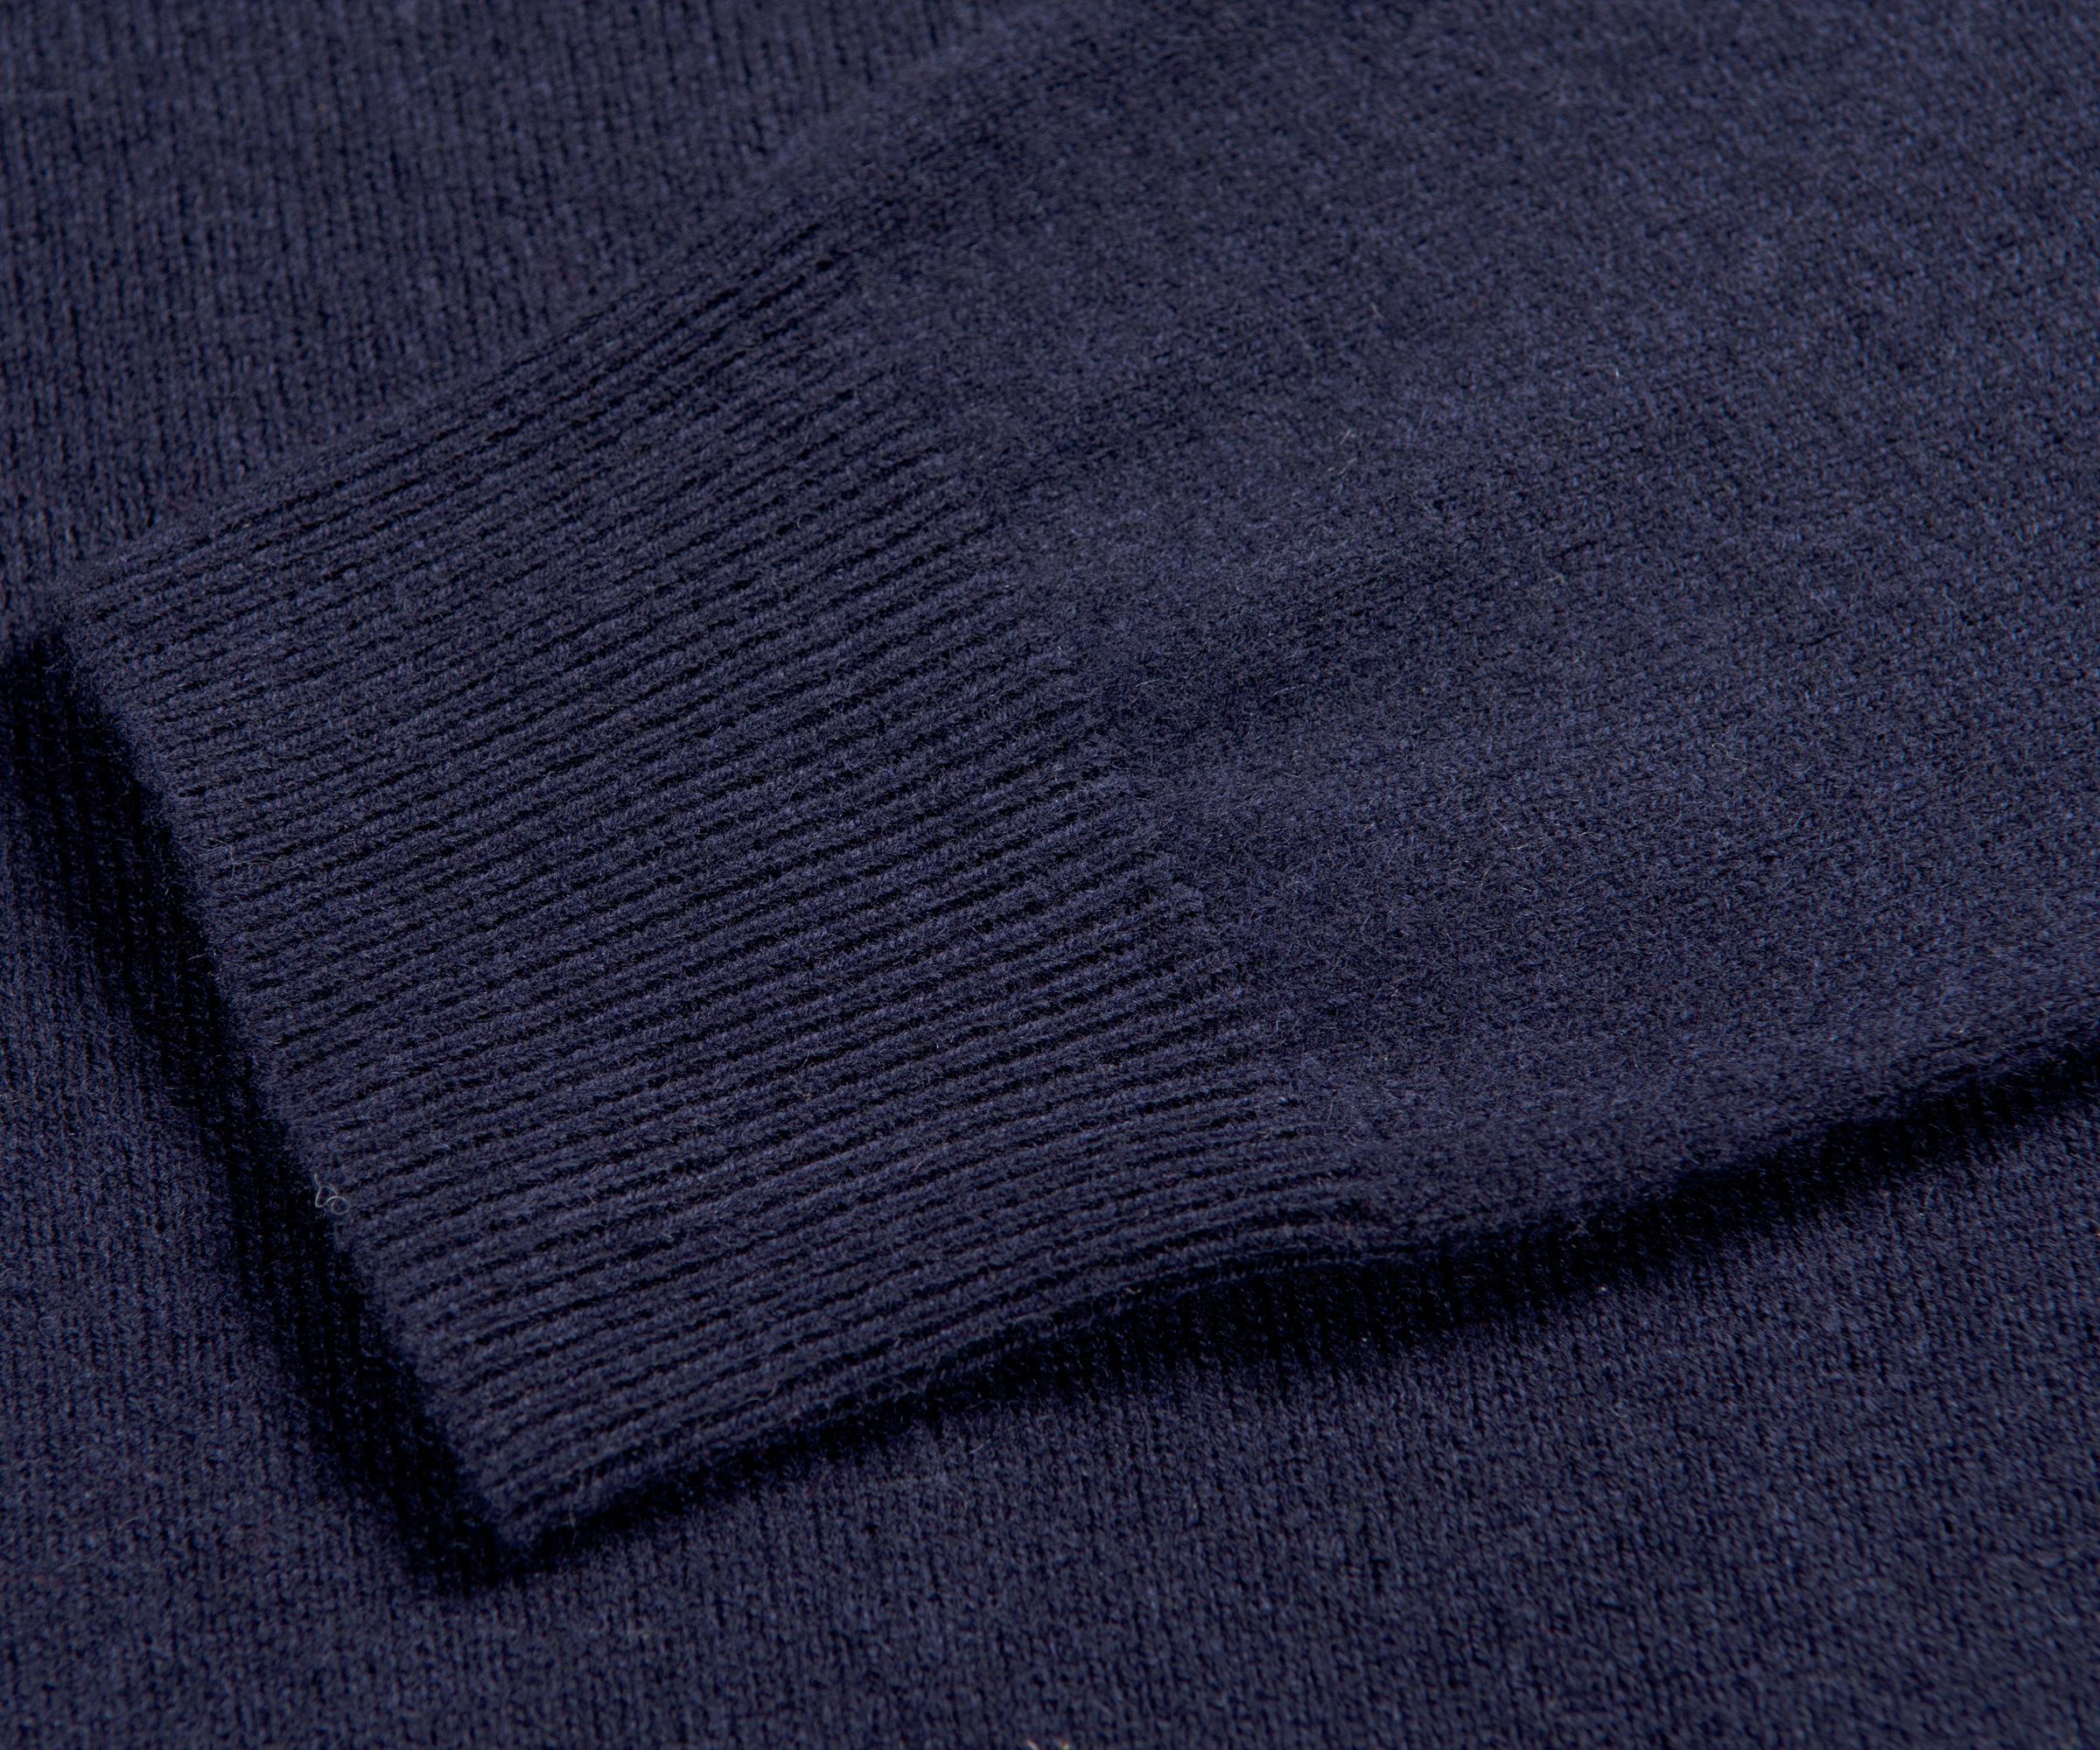 Ralph Lauren 'hunter' Merino Wool Crew Knit Navy in Blue for Men - Lyst